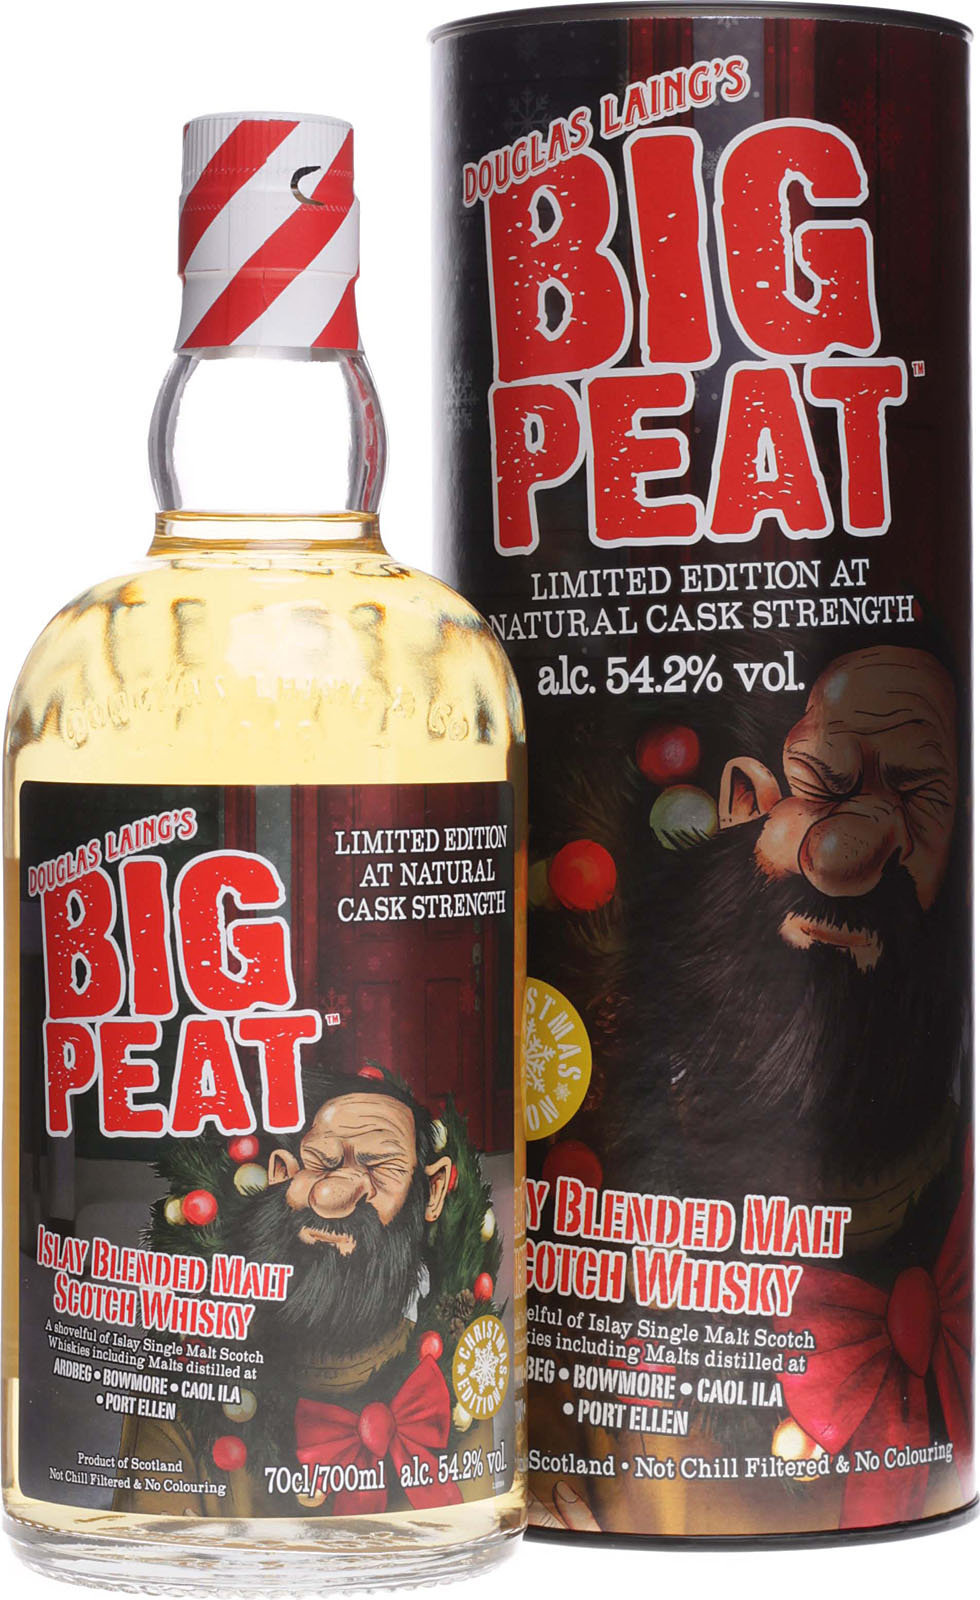 Buy Big Peat Christmas Edition 2021 Cask Strength® Online